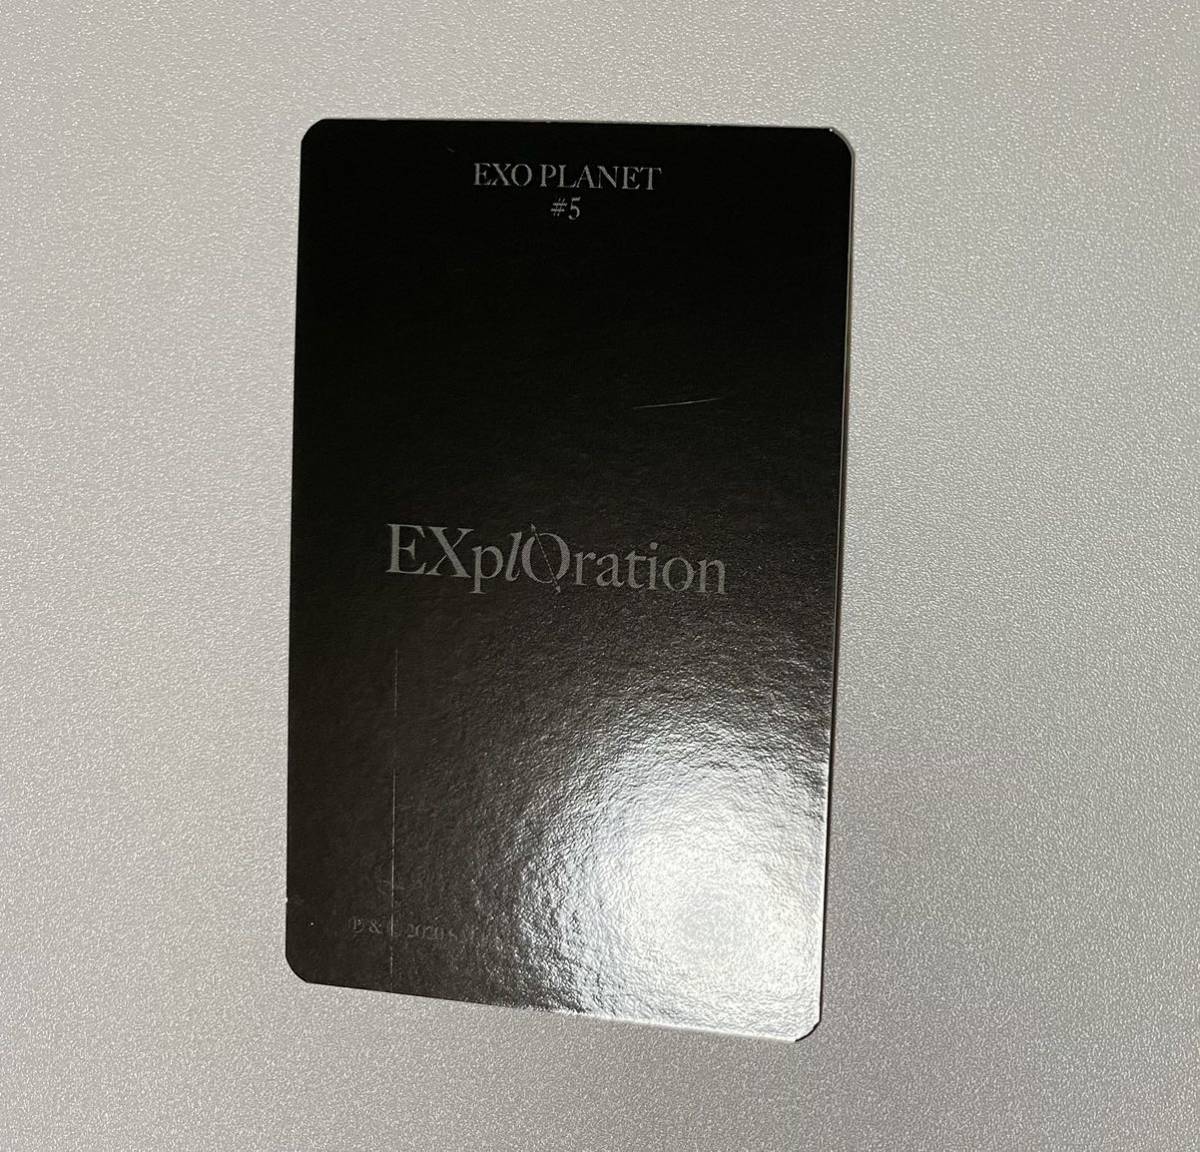 EXO PLANET #5 - EXplOration Seoul ソウルコン DVD 特典 カイ KAI トレカ Photocard_画像6